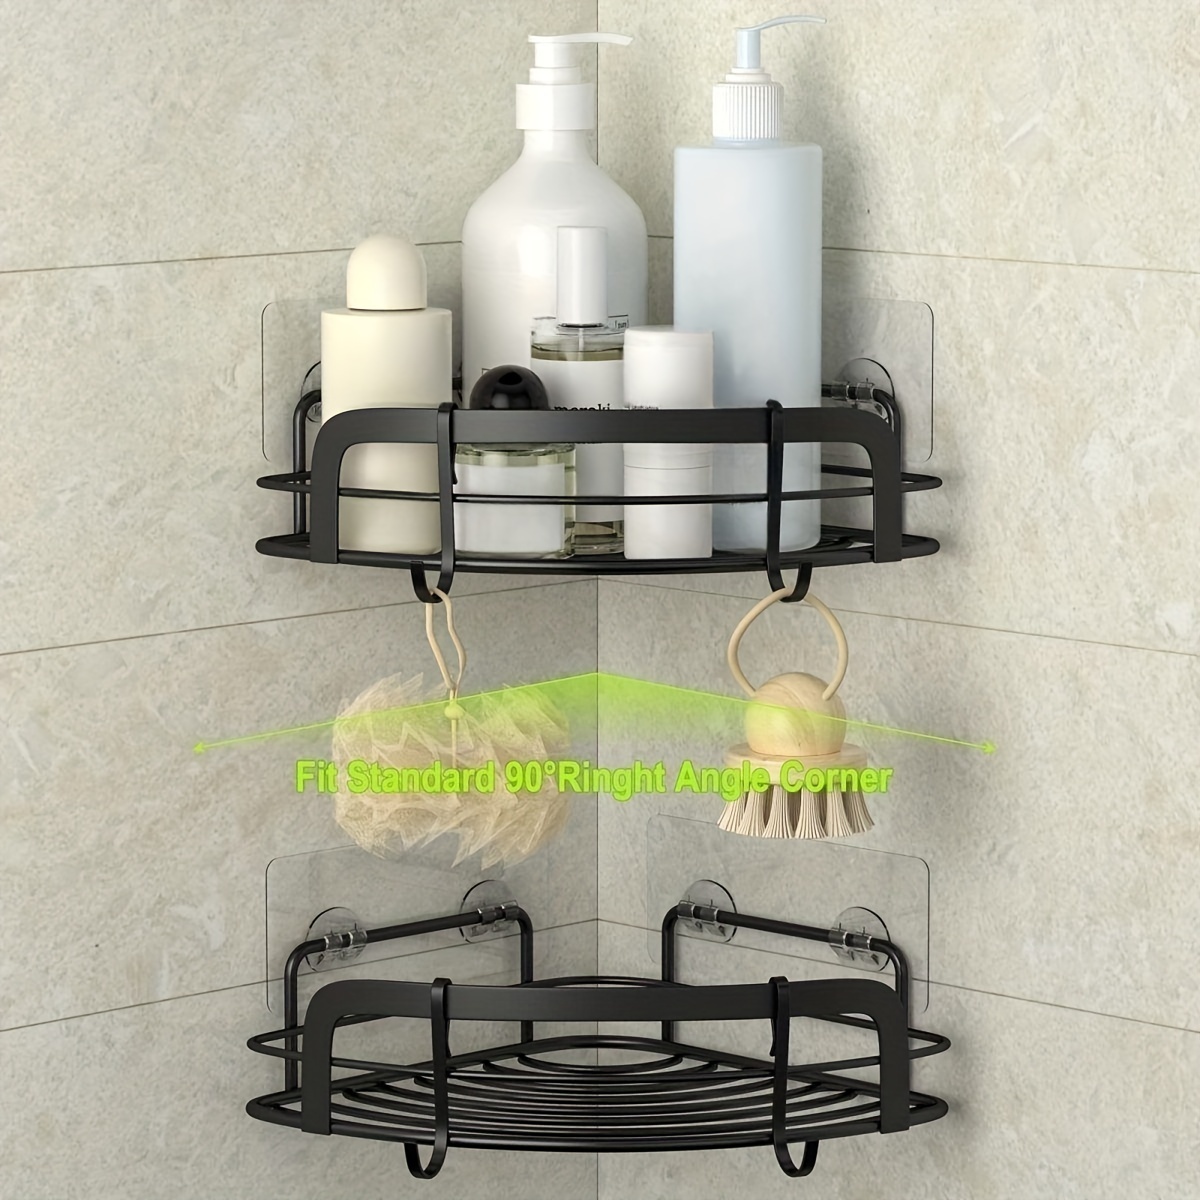 stusgo 3 Pack Corner Shower Caddy, Corner Shower Shelf with 18